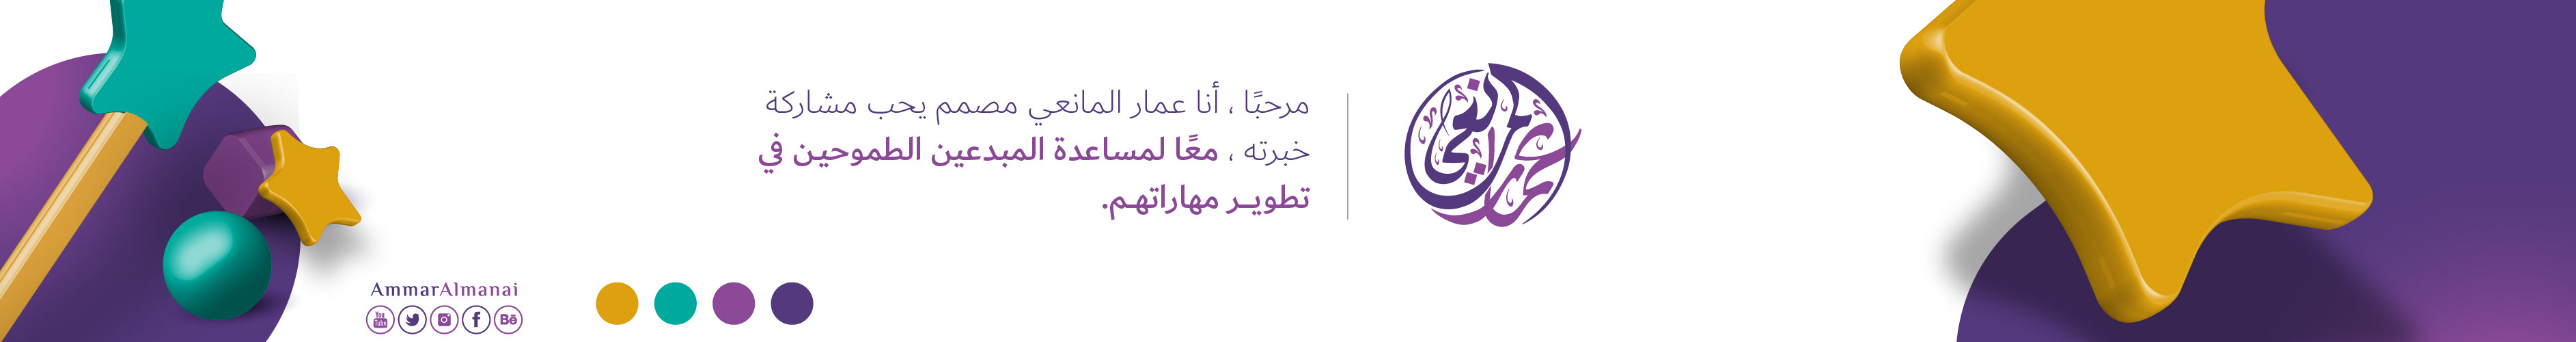 عمار المانعي's profile banner